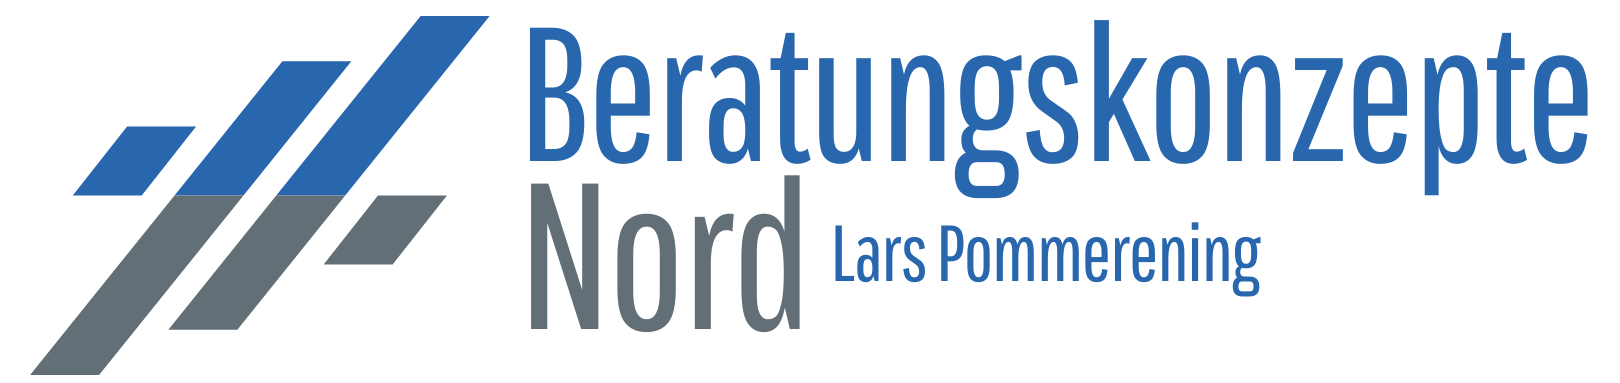 Beratungskonzepte Nord – Lars Pommerening